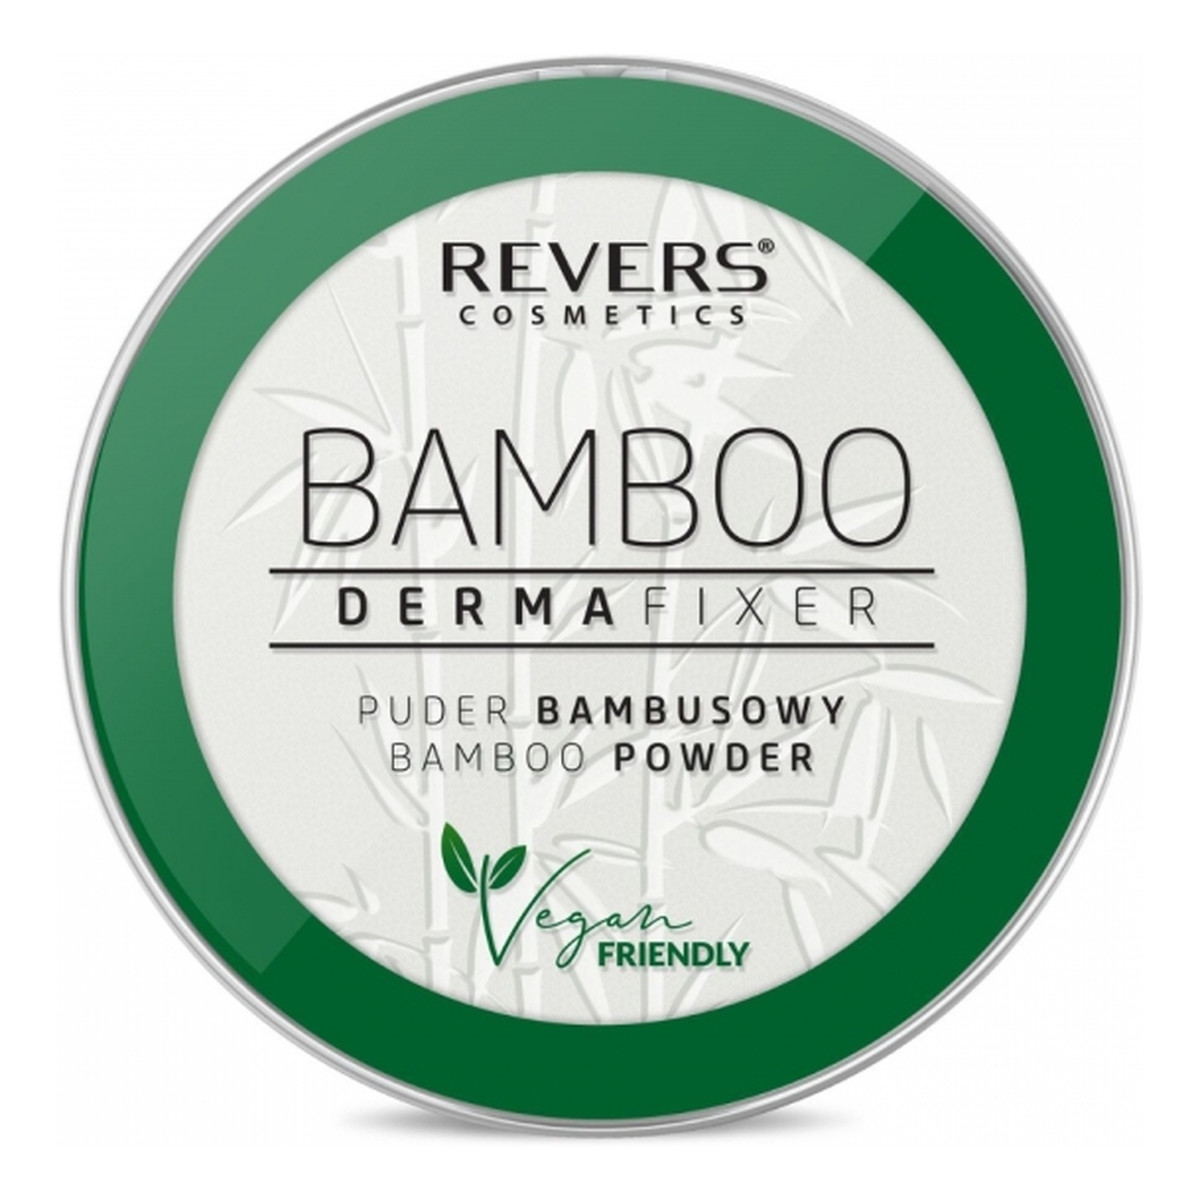 Revers Puder Bambusowy prasowany Bamboo Derma Fixer 10g